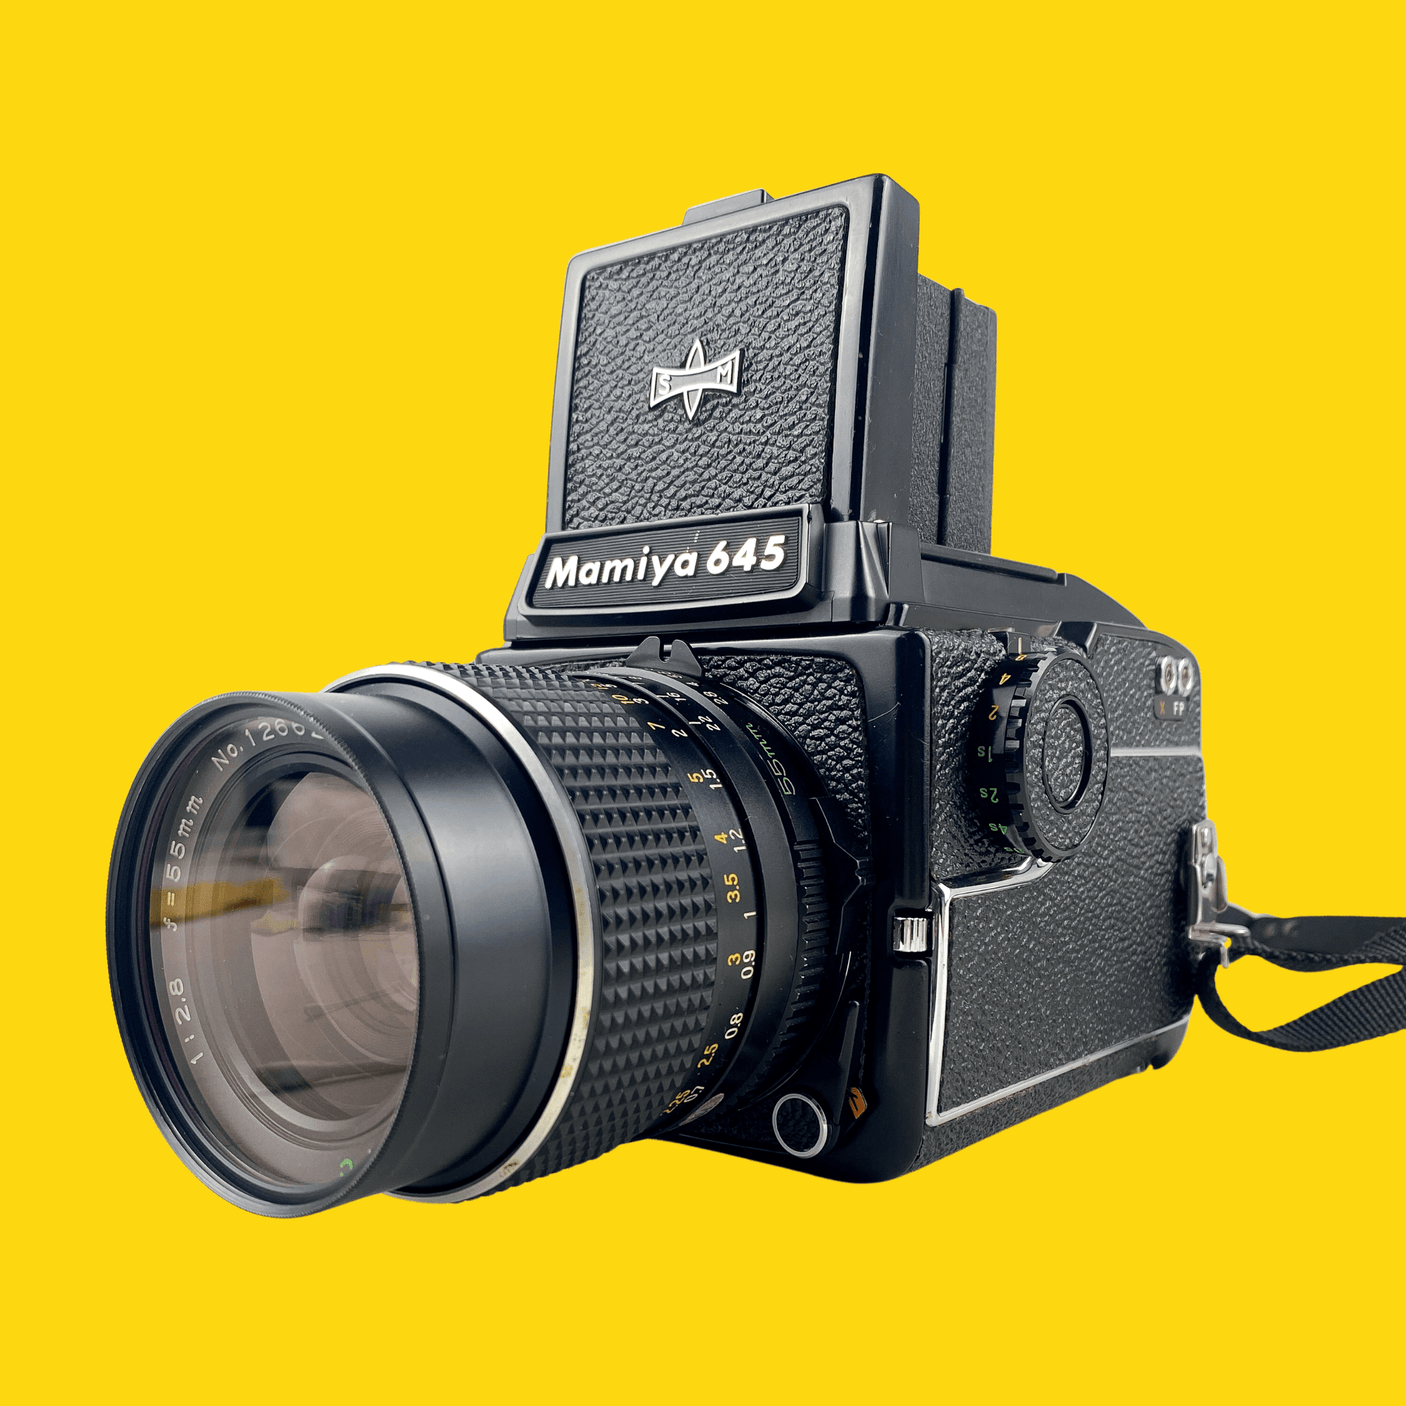 Mamiya M645 1000S with 55mm F2.8 Lens. 6X4.5 Medium Format Film 